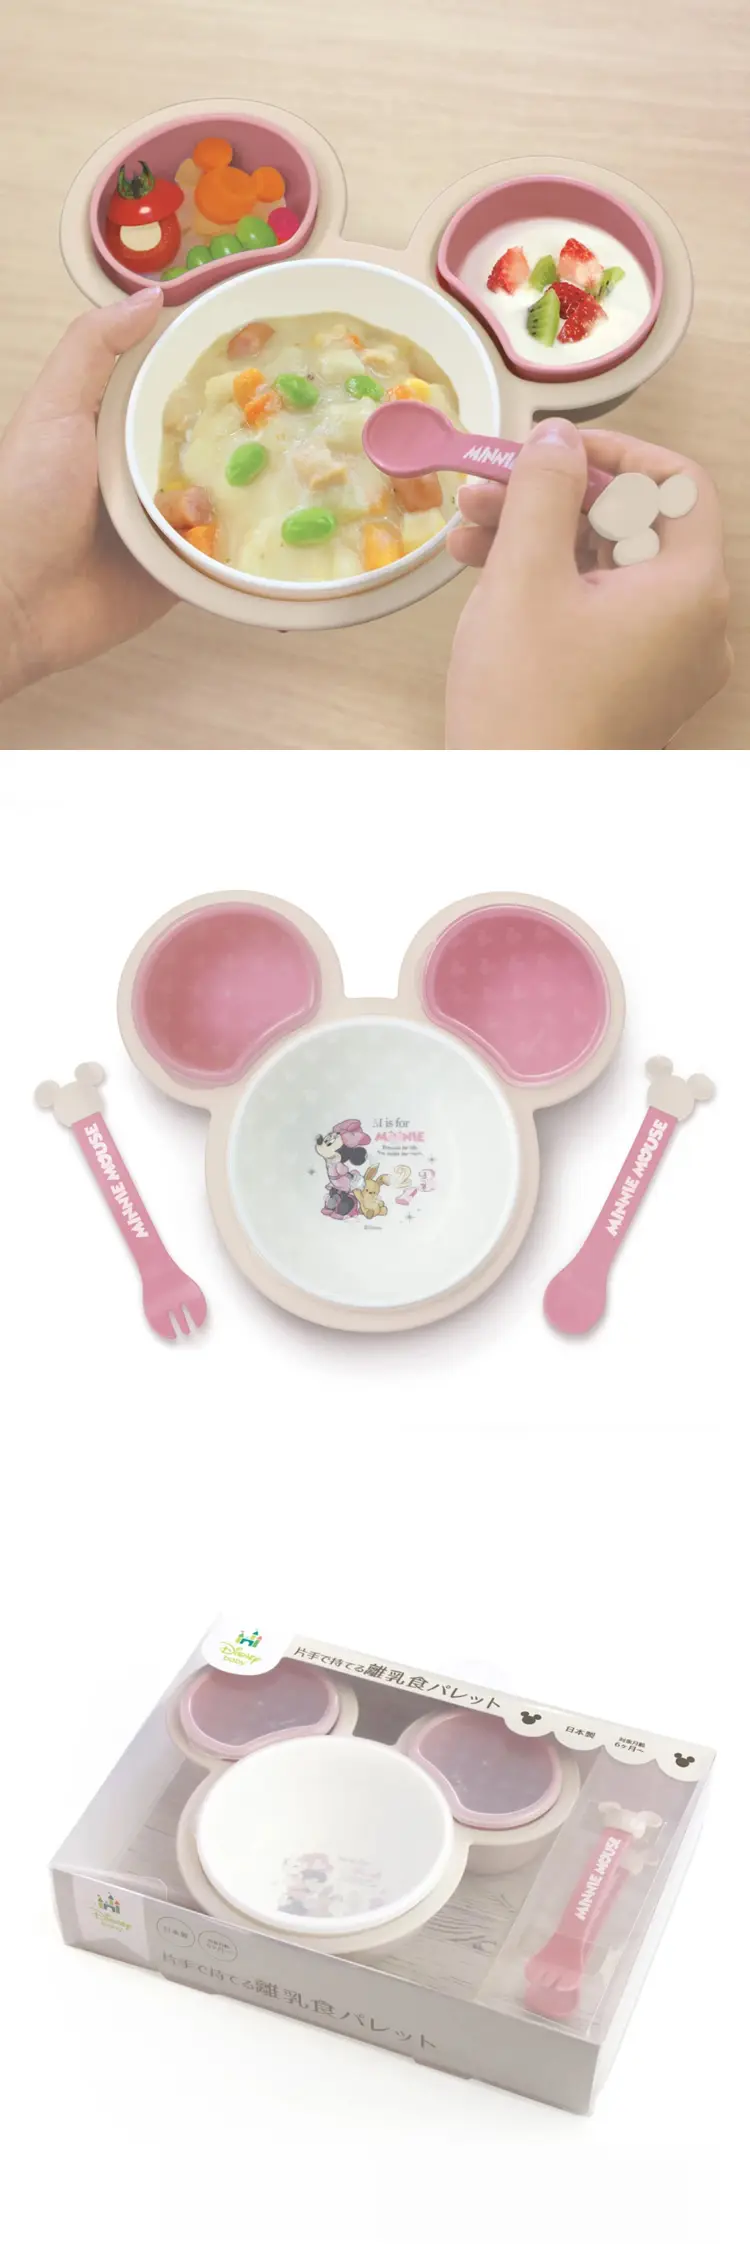 Disney 嬰幼兒餐具套裝 米妮款